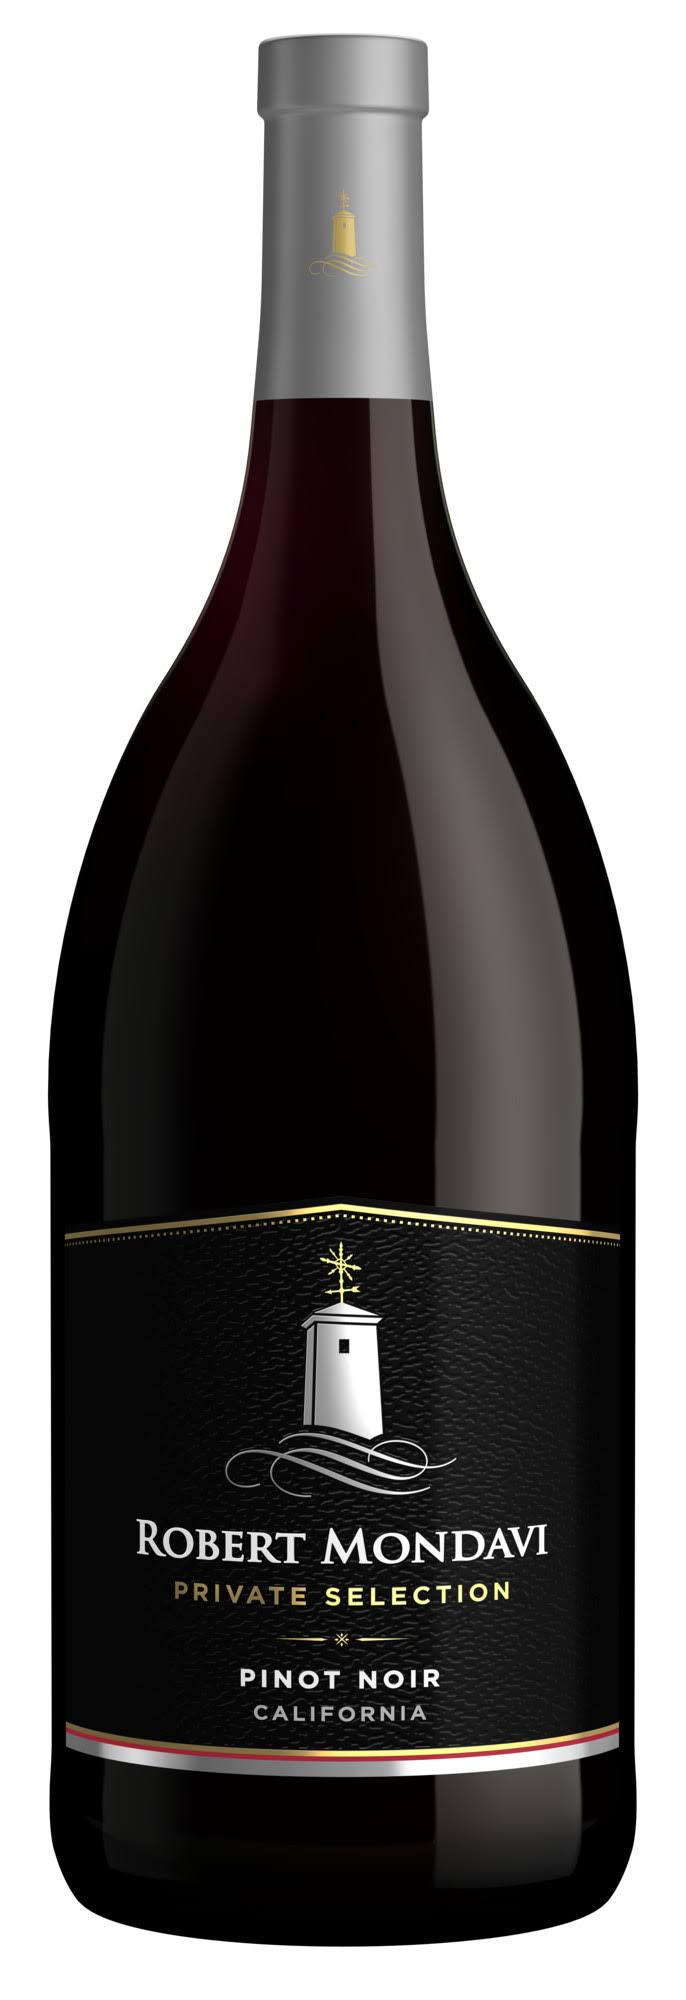 Robert Mondavi Pinot Noir Private Selection Wine - 1.5 L bottle